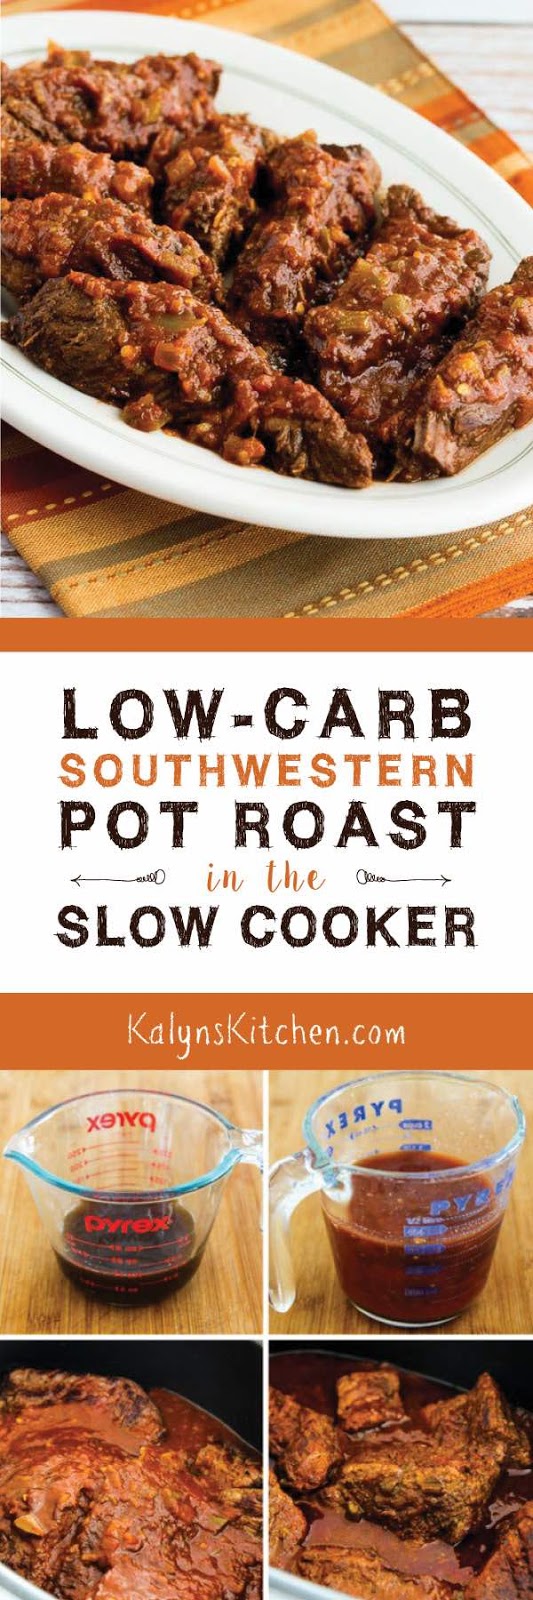 Low-Carb Southwestern Pot Roast in the Slow Cooker - Kalyn's Kitchen